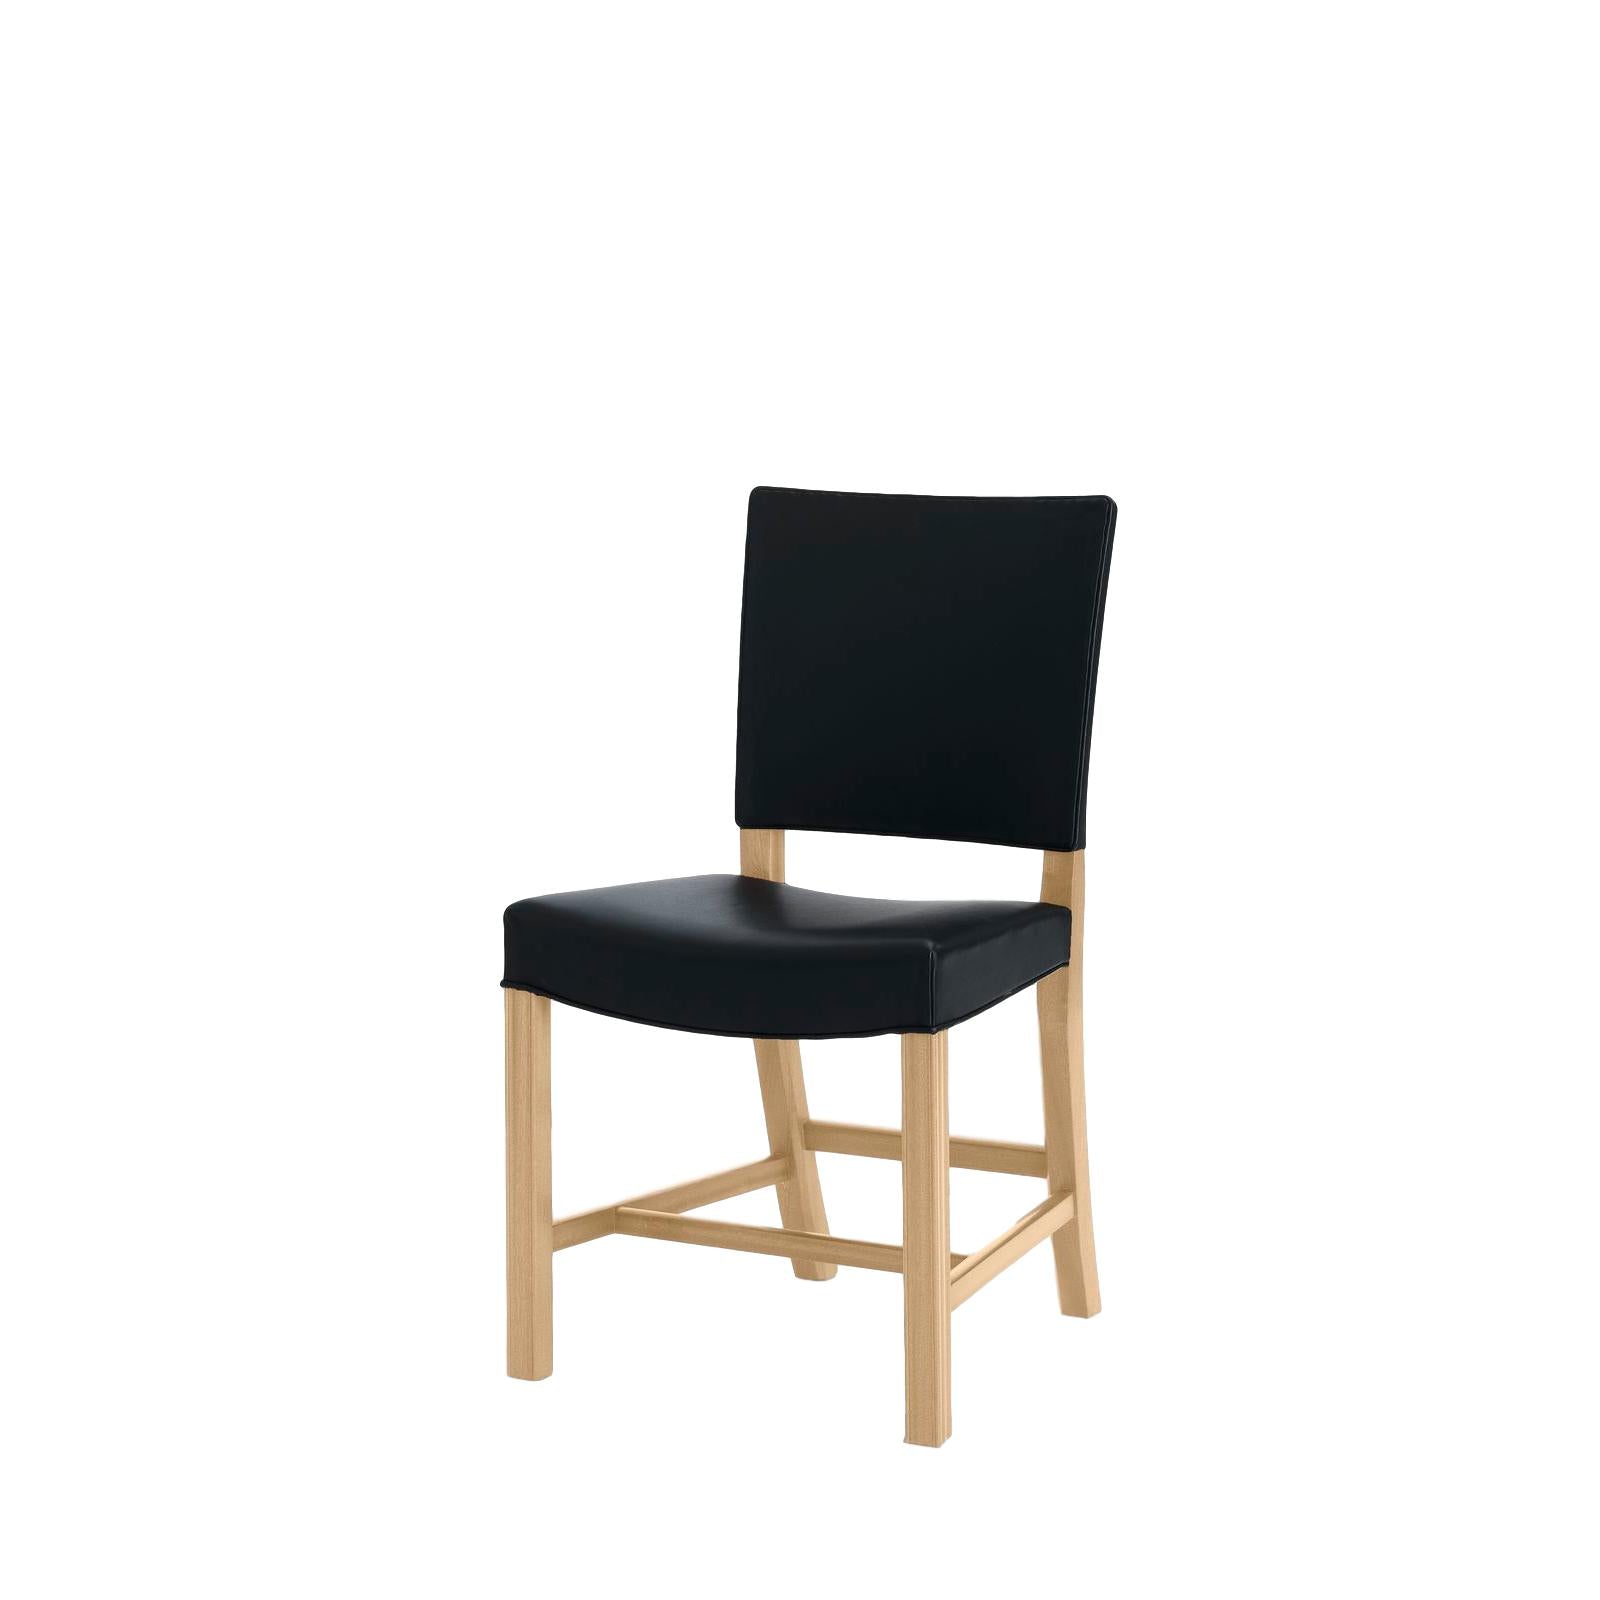 Carl Hansen KK37580 grande sedia rossa, quercia in sapone/pelle nera